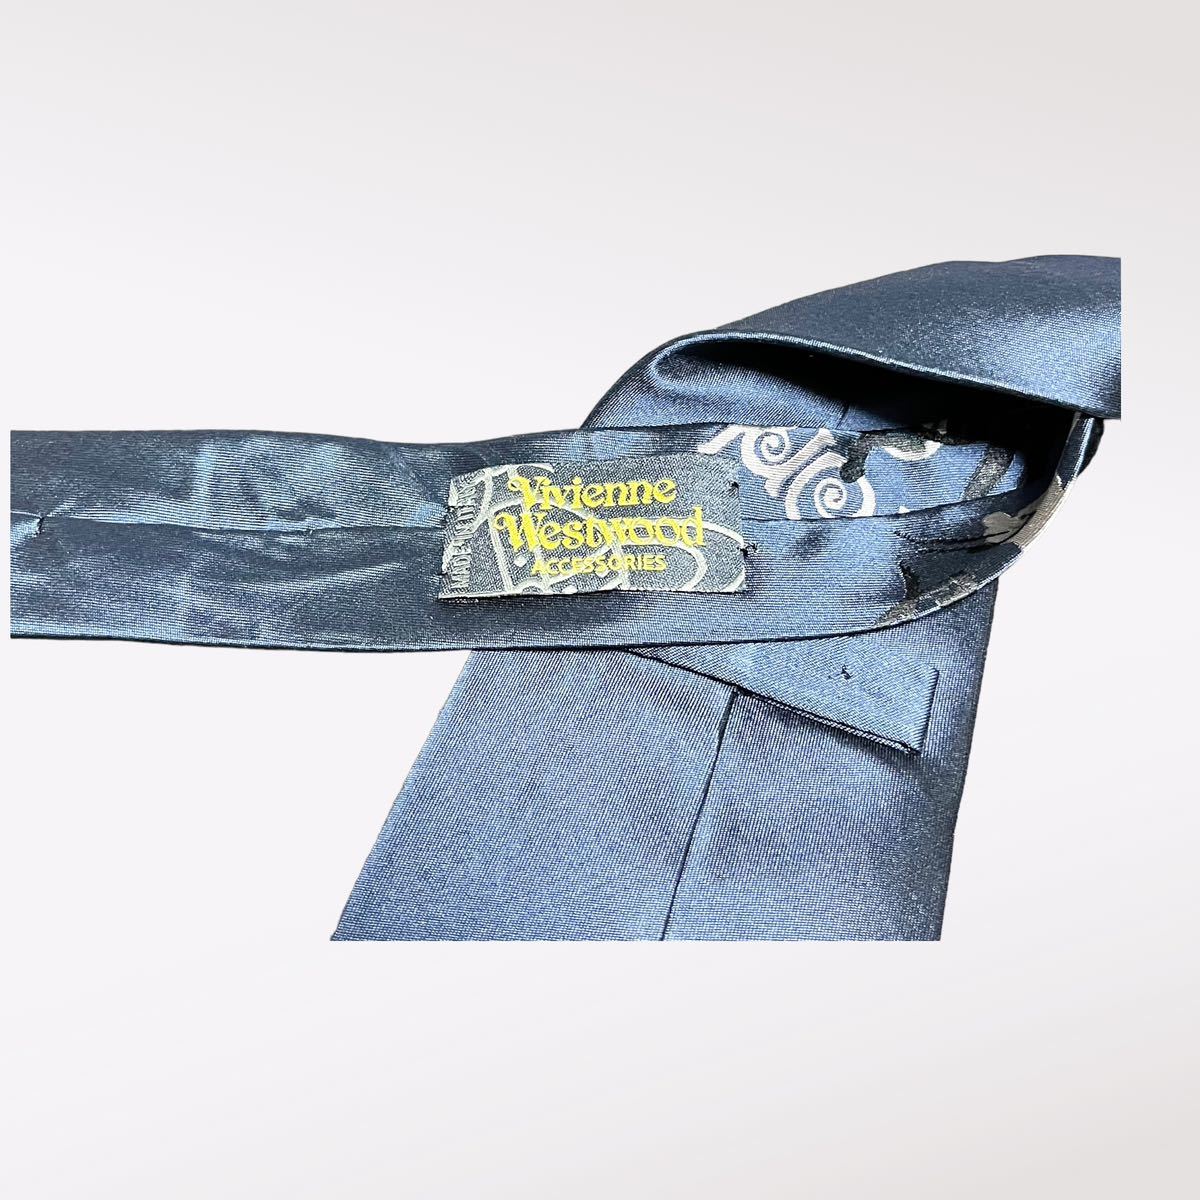  Vivienne Westwood общий рисунок галстук темно-синий Италия производства 